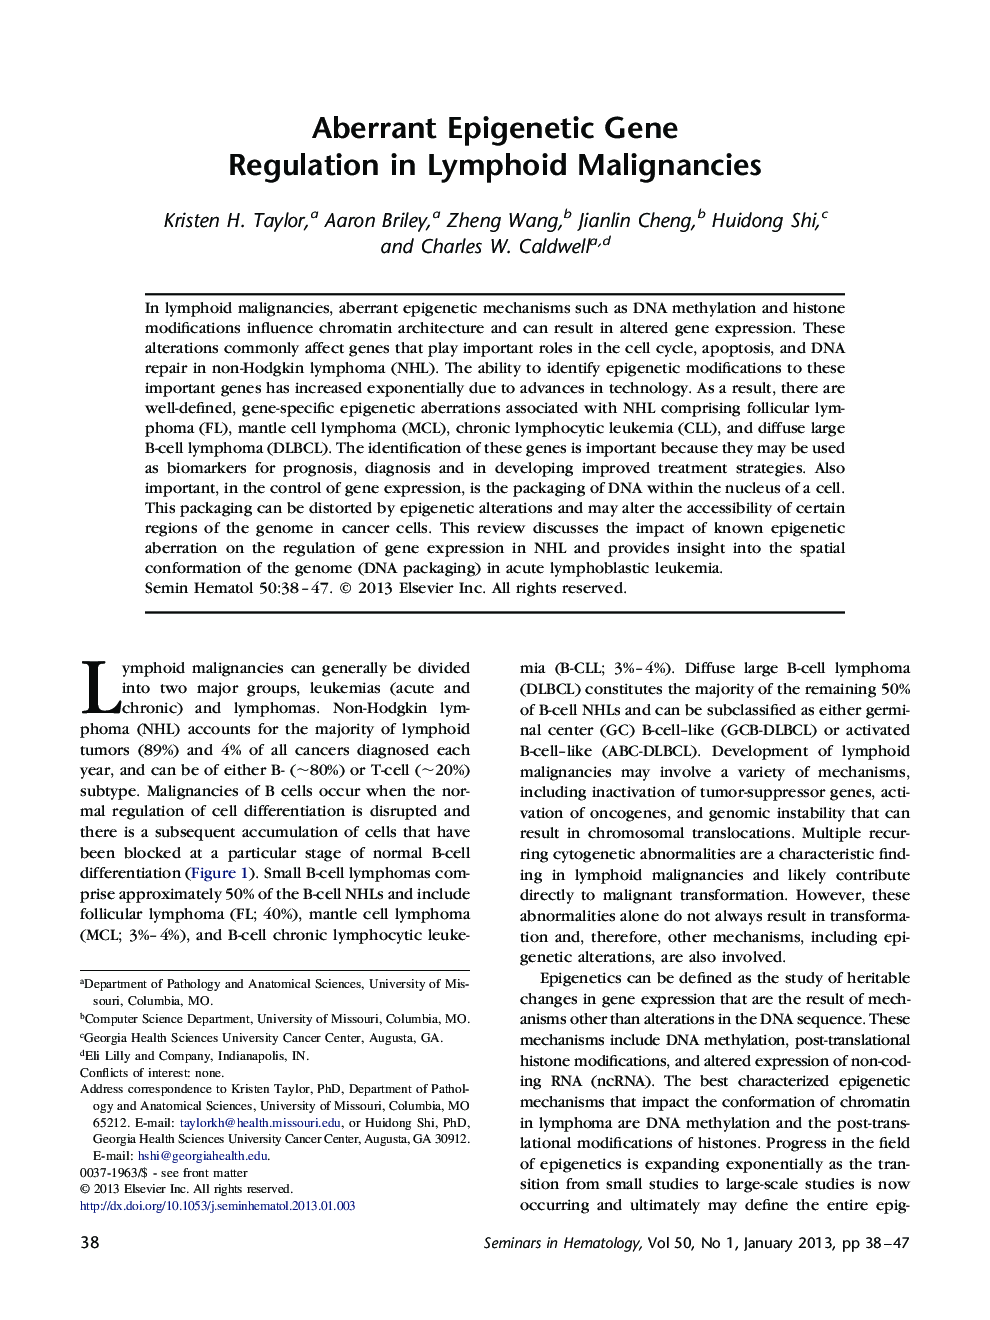 Aberrant Epigenetic Gene Regulation in Lymphoid Malignancies